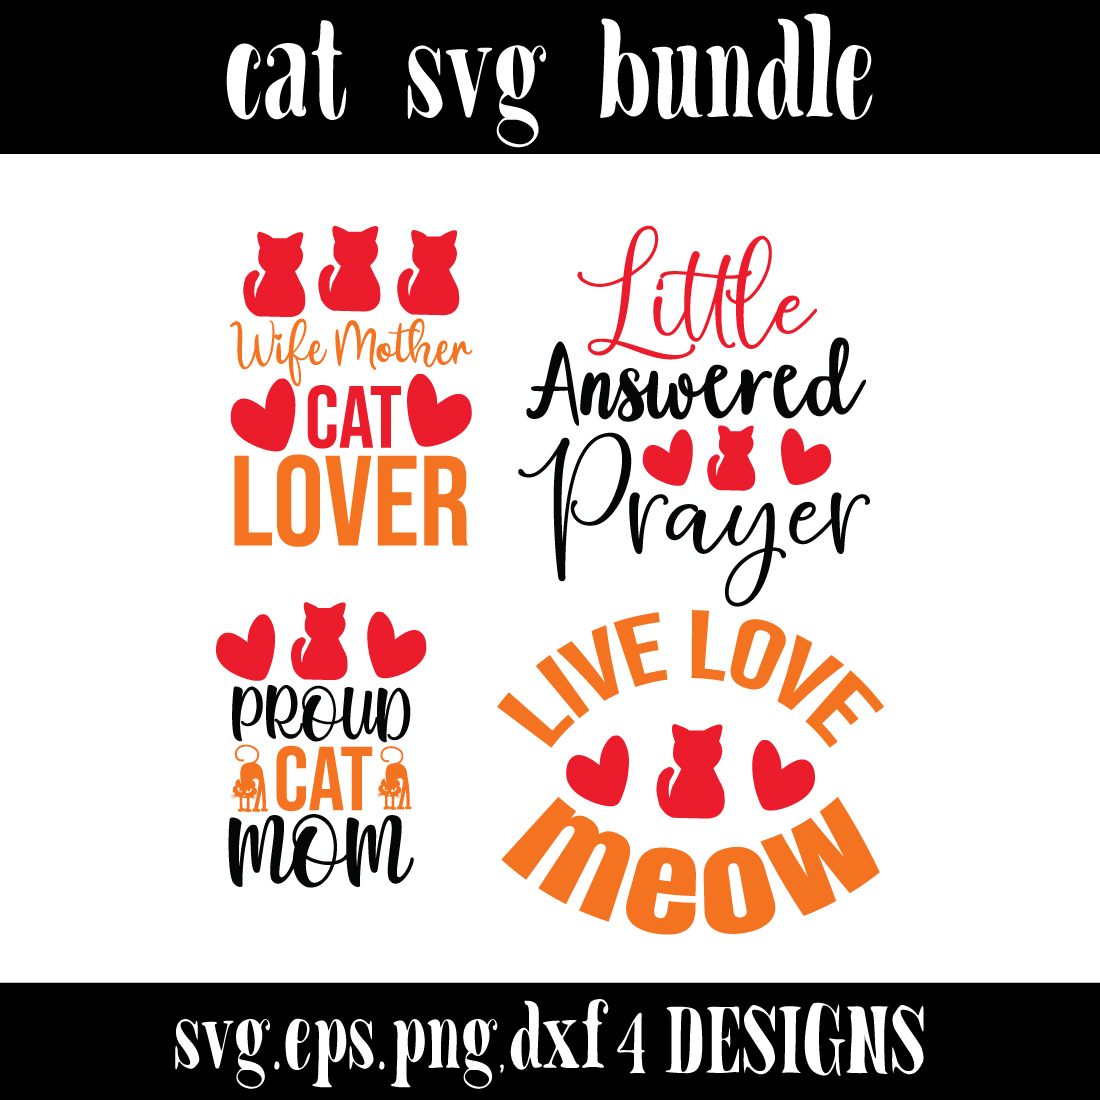 4 cat SVG Design Bundle preview image.